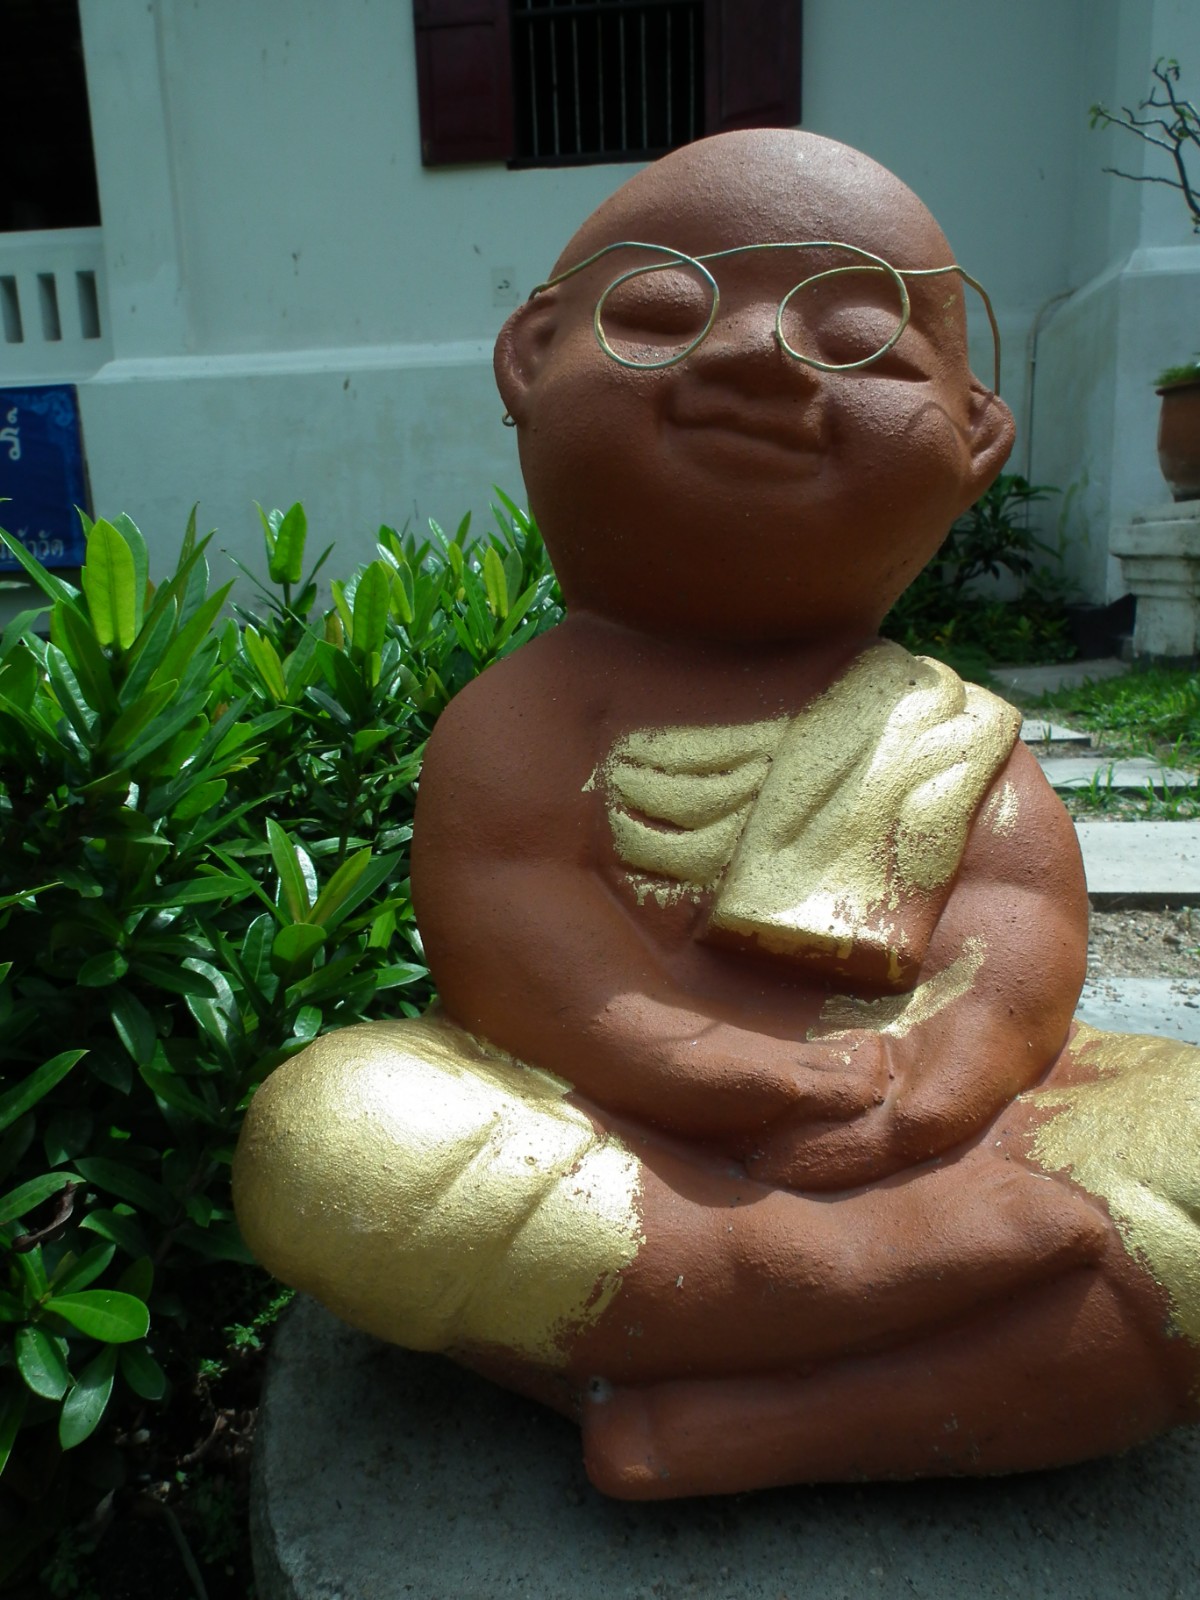 Buddist monk statue, Statue | Buddist | Monk | Garden | Travel | Religious | Stone | Smile | Thailand